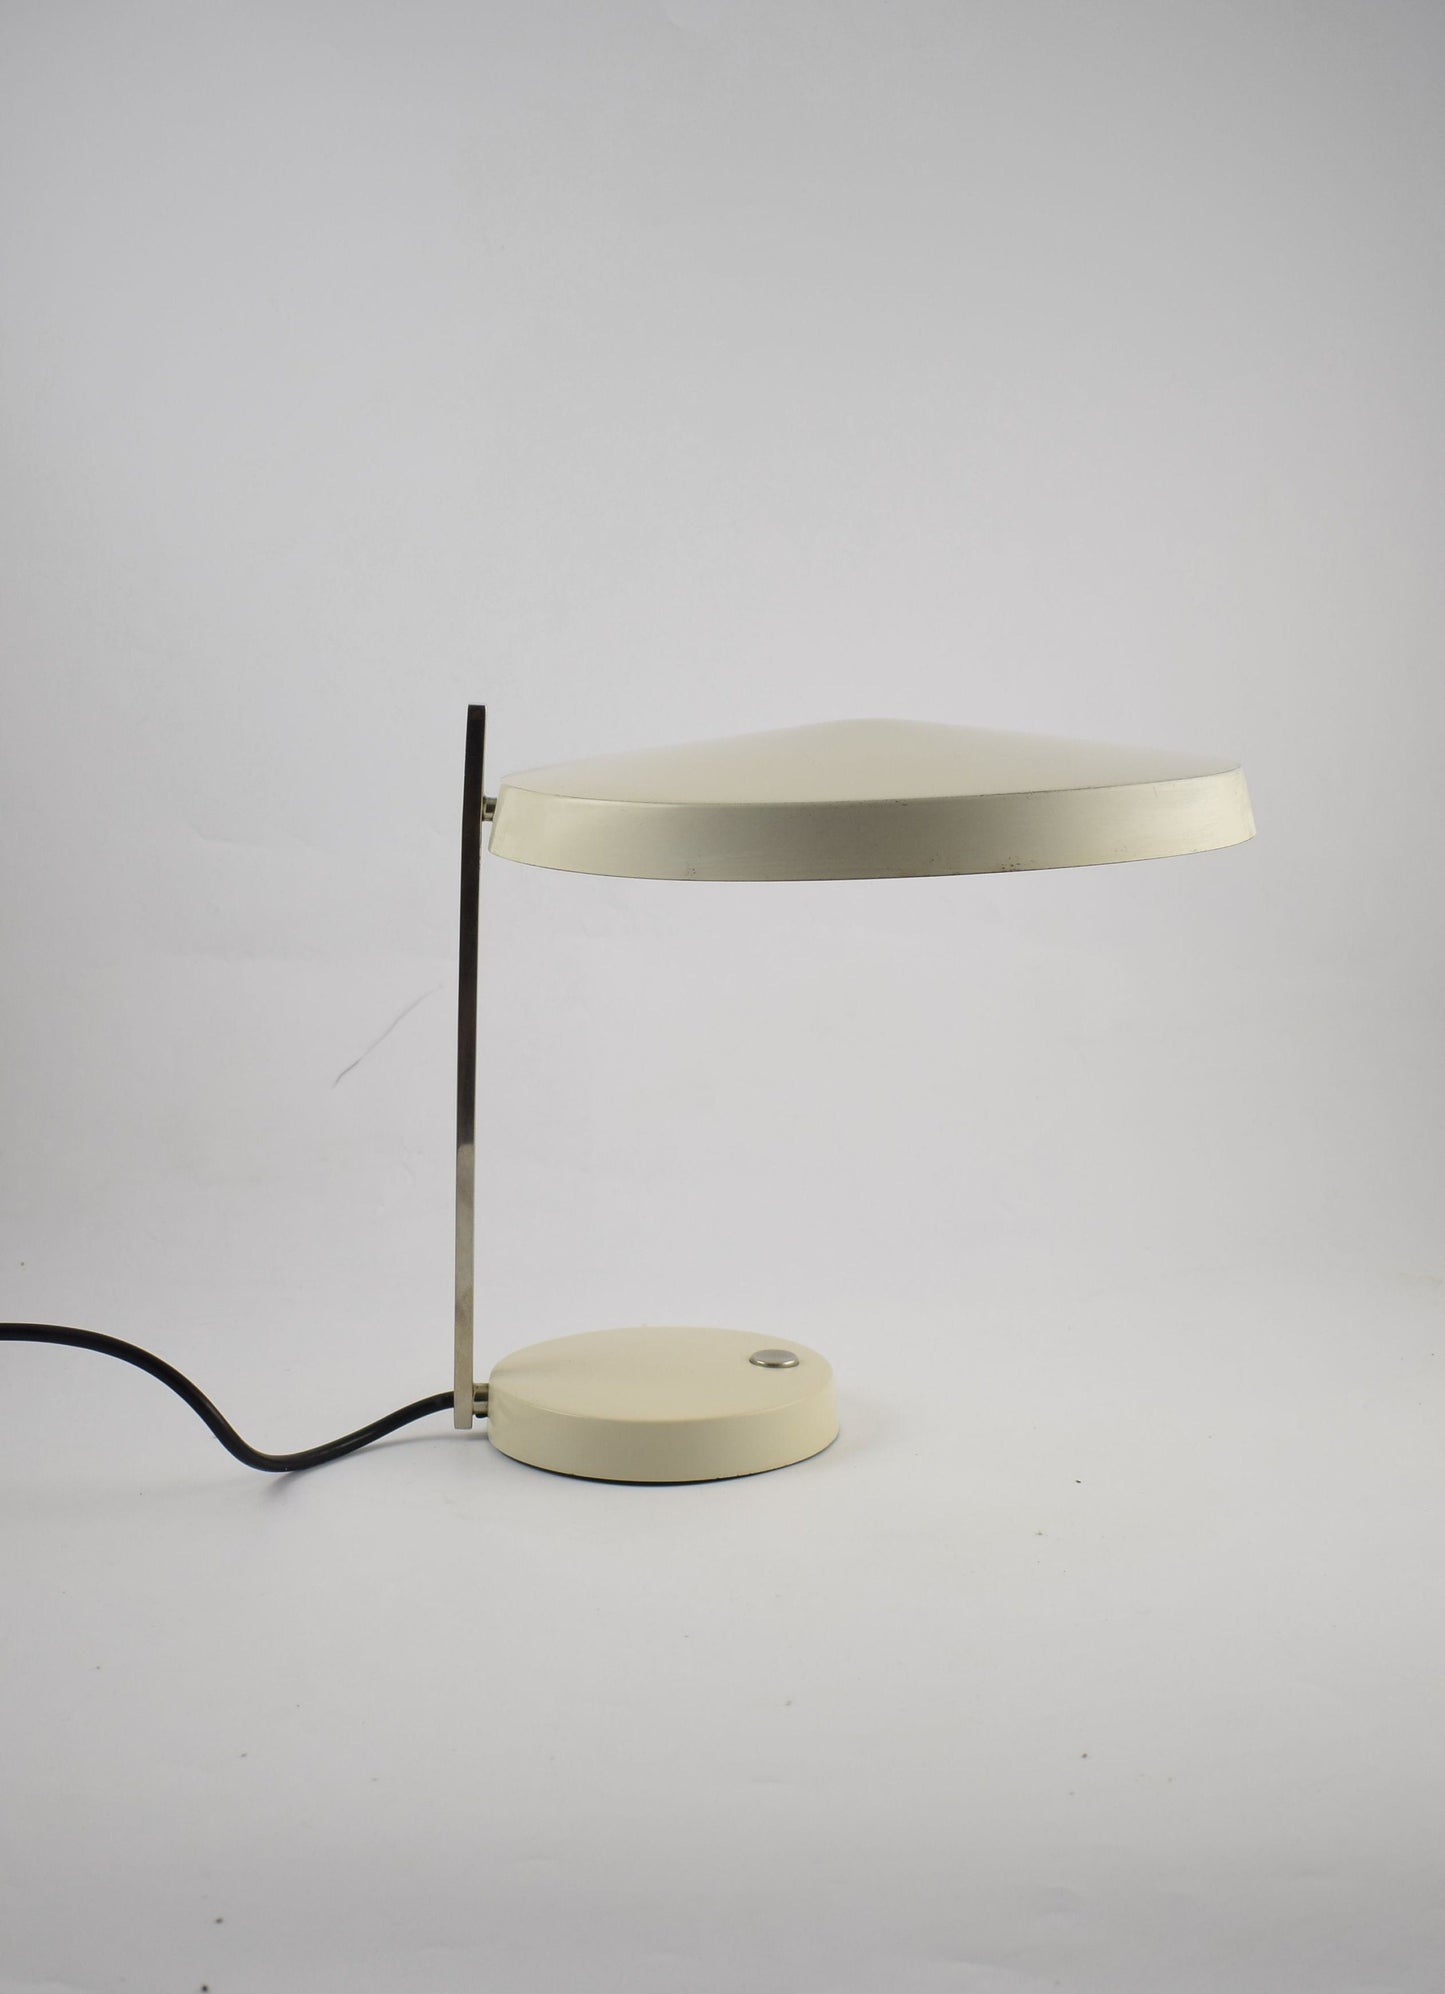 Hillebrand leuchten tafellamp Oslo, grijze bureaulamp ontworpen door Heinz Pfaender 1962.